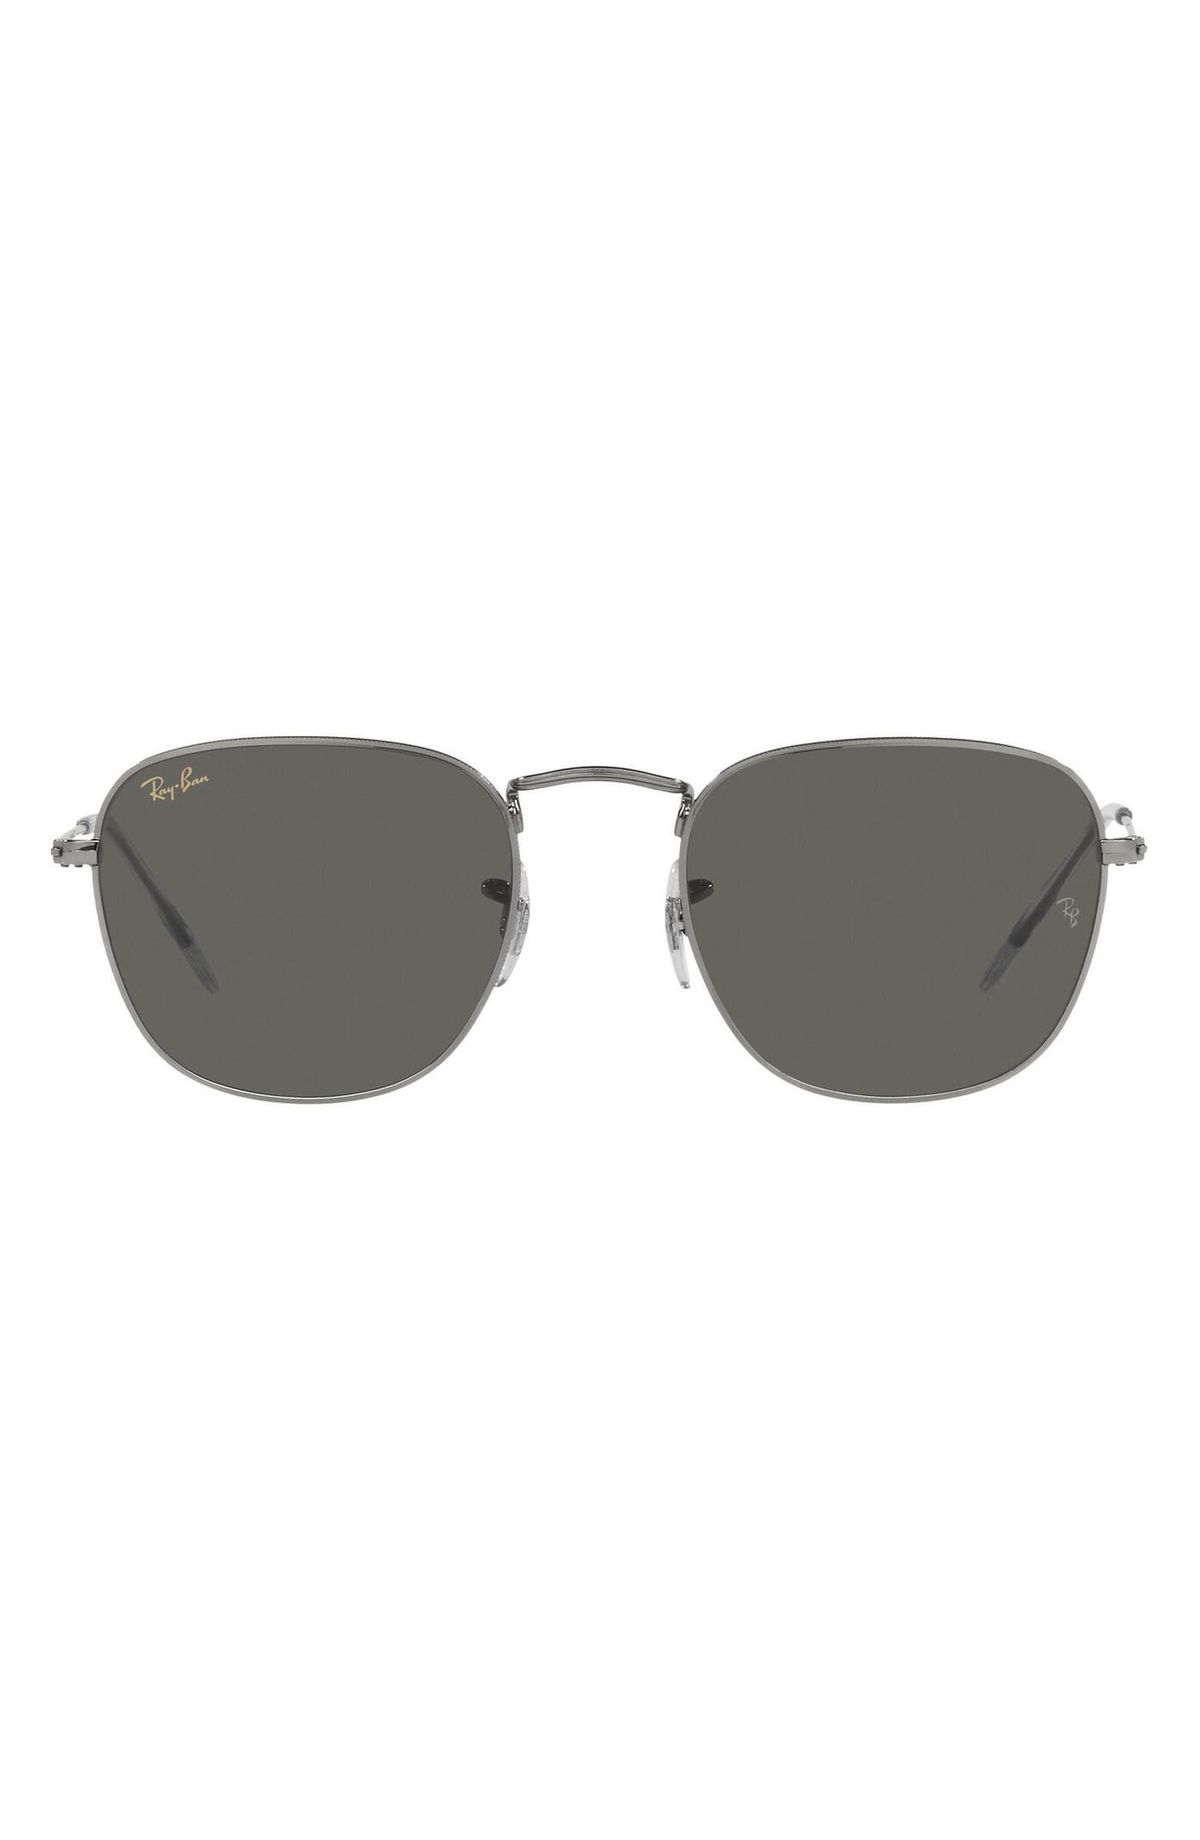 Ray Ban 51 mm Square Sunglasses